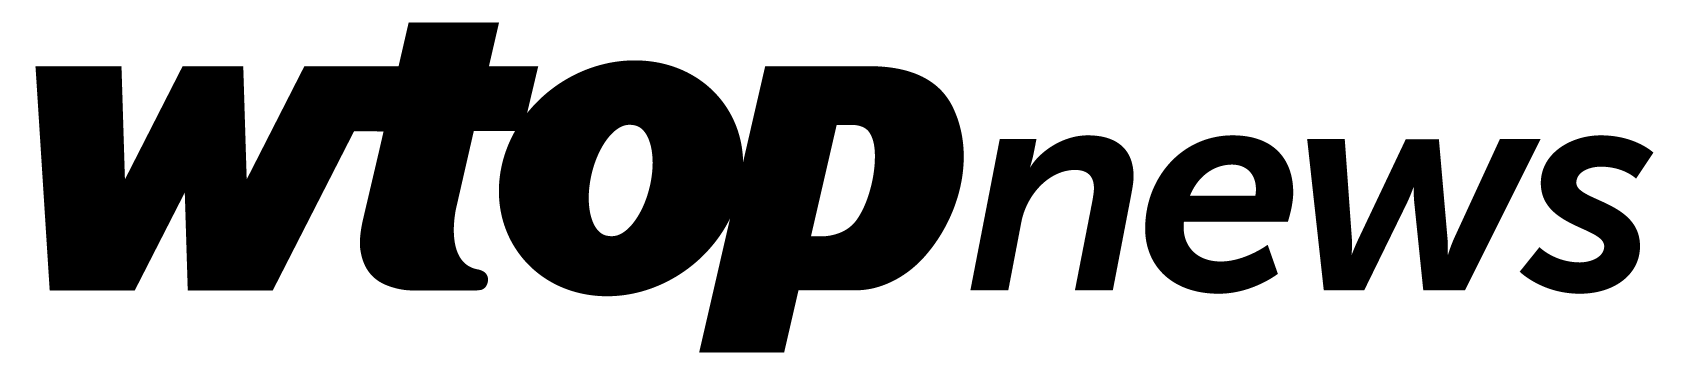 WTOP News Logo HORIZONTAL Trans BLACK.png